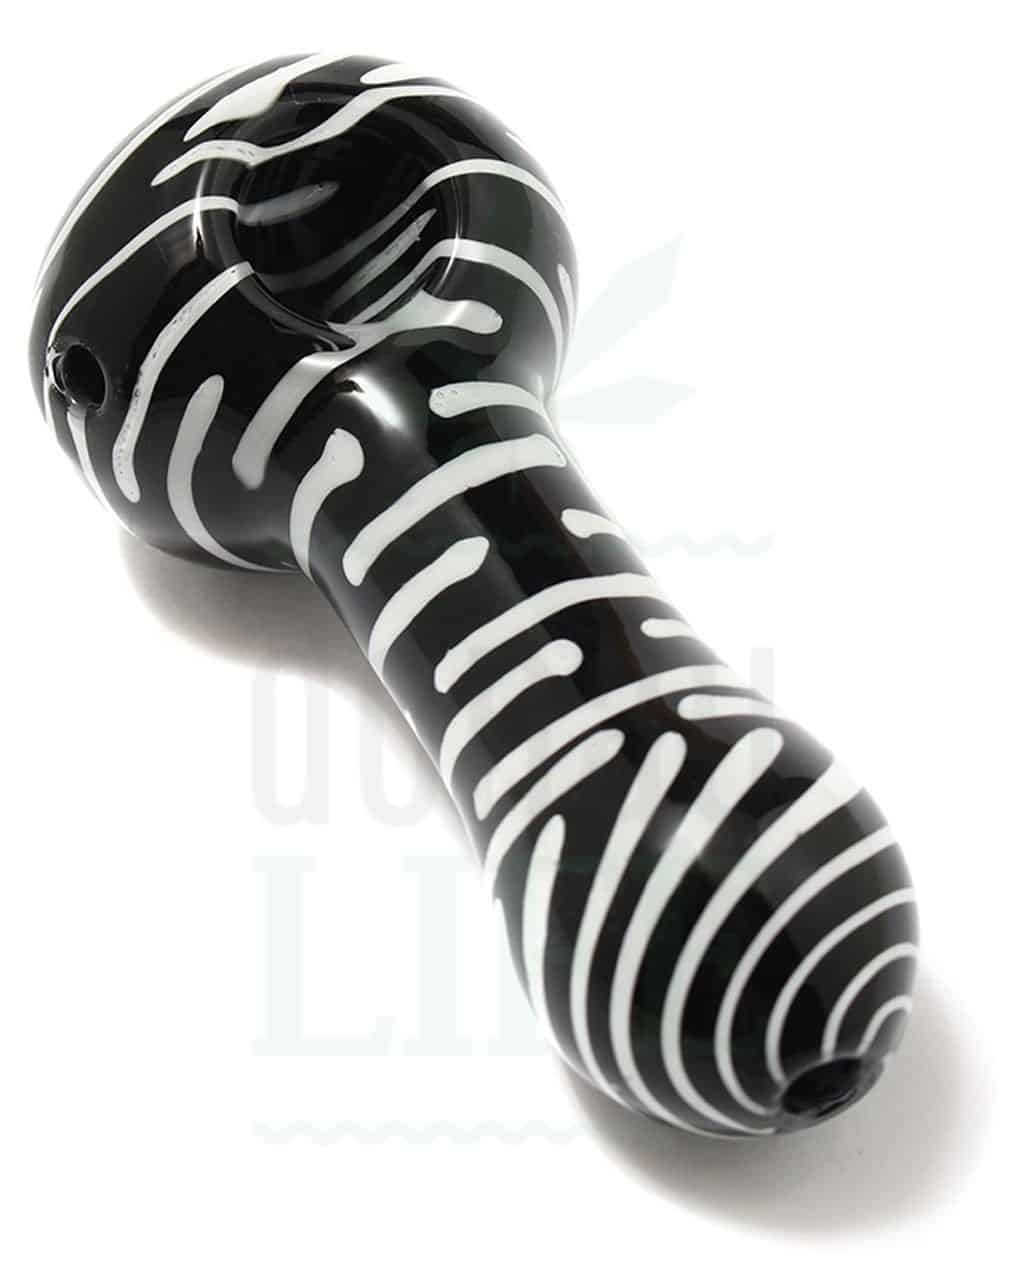 Glaspfeifen Black Leaf “Little Zebra” Spoon Pipe